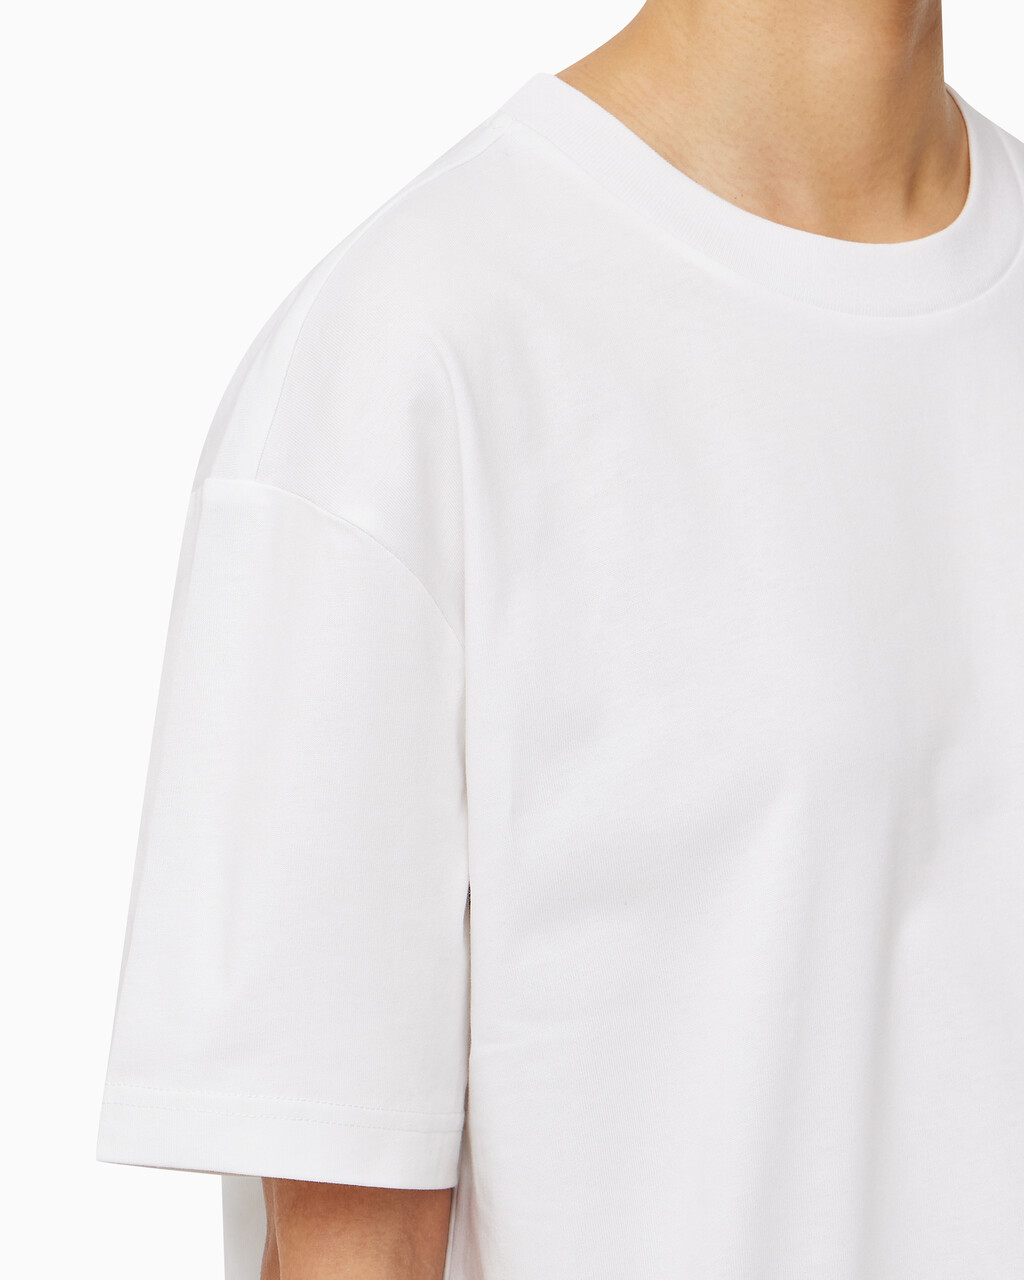 Buy 남녀공용 릴렉스핏 로고 반팔 티셔츠 in color BRIGHT WHITE